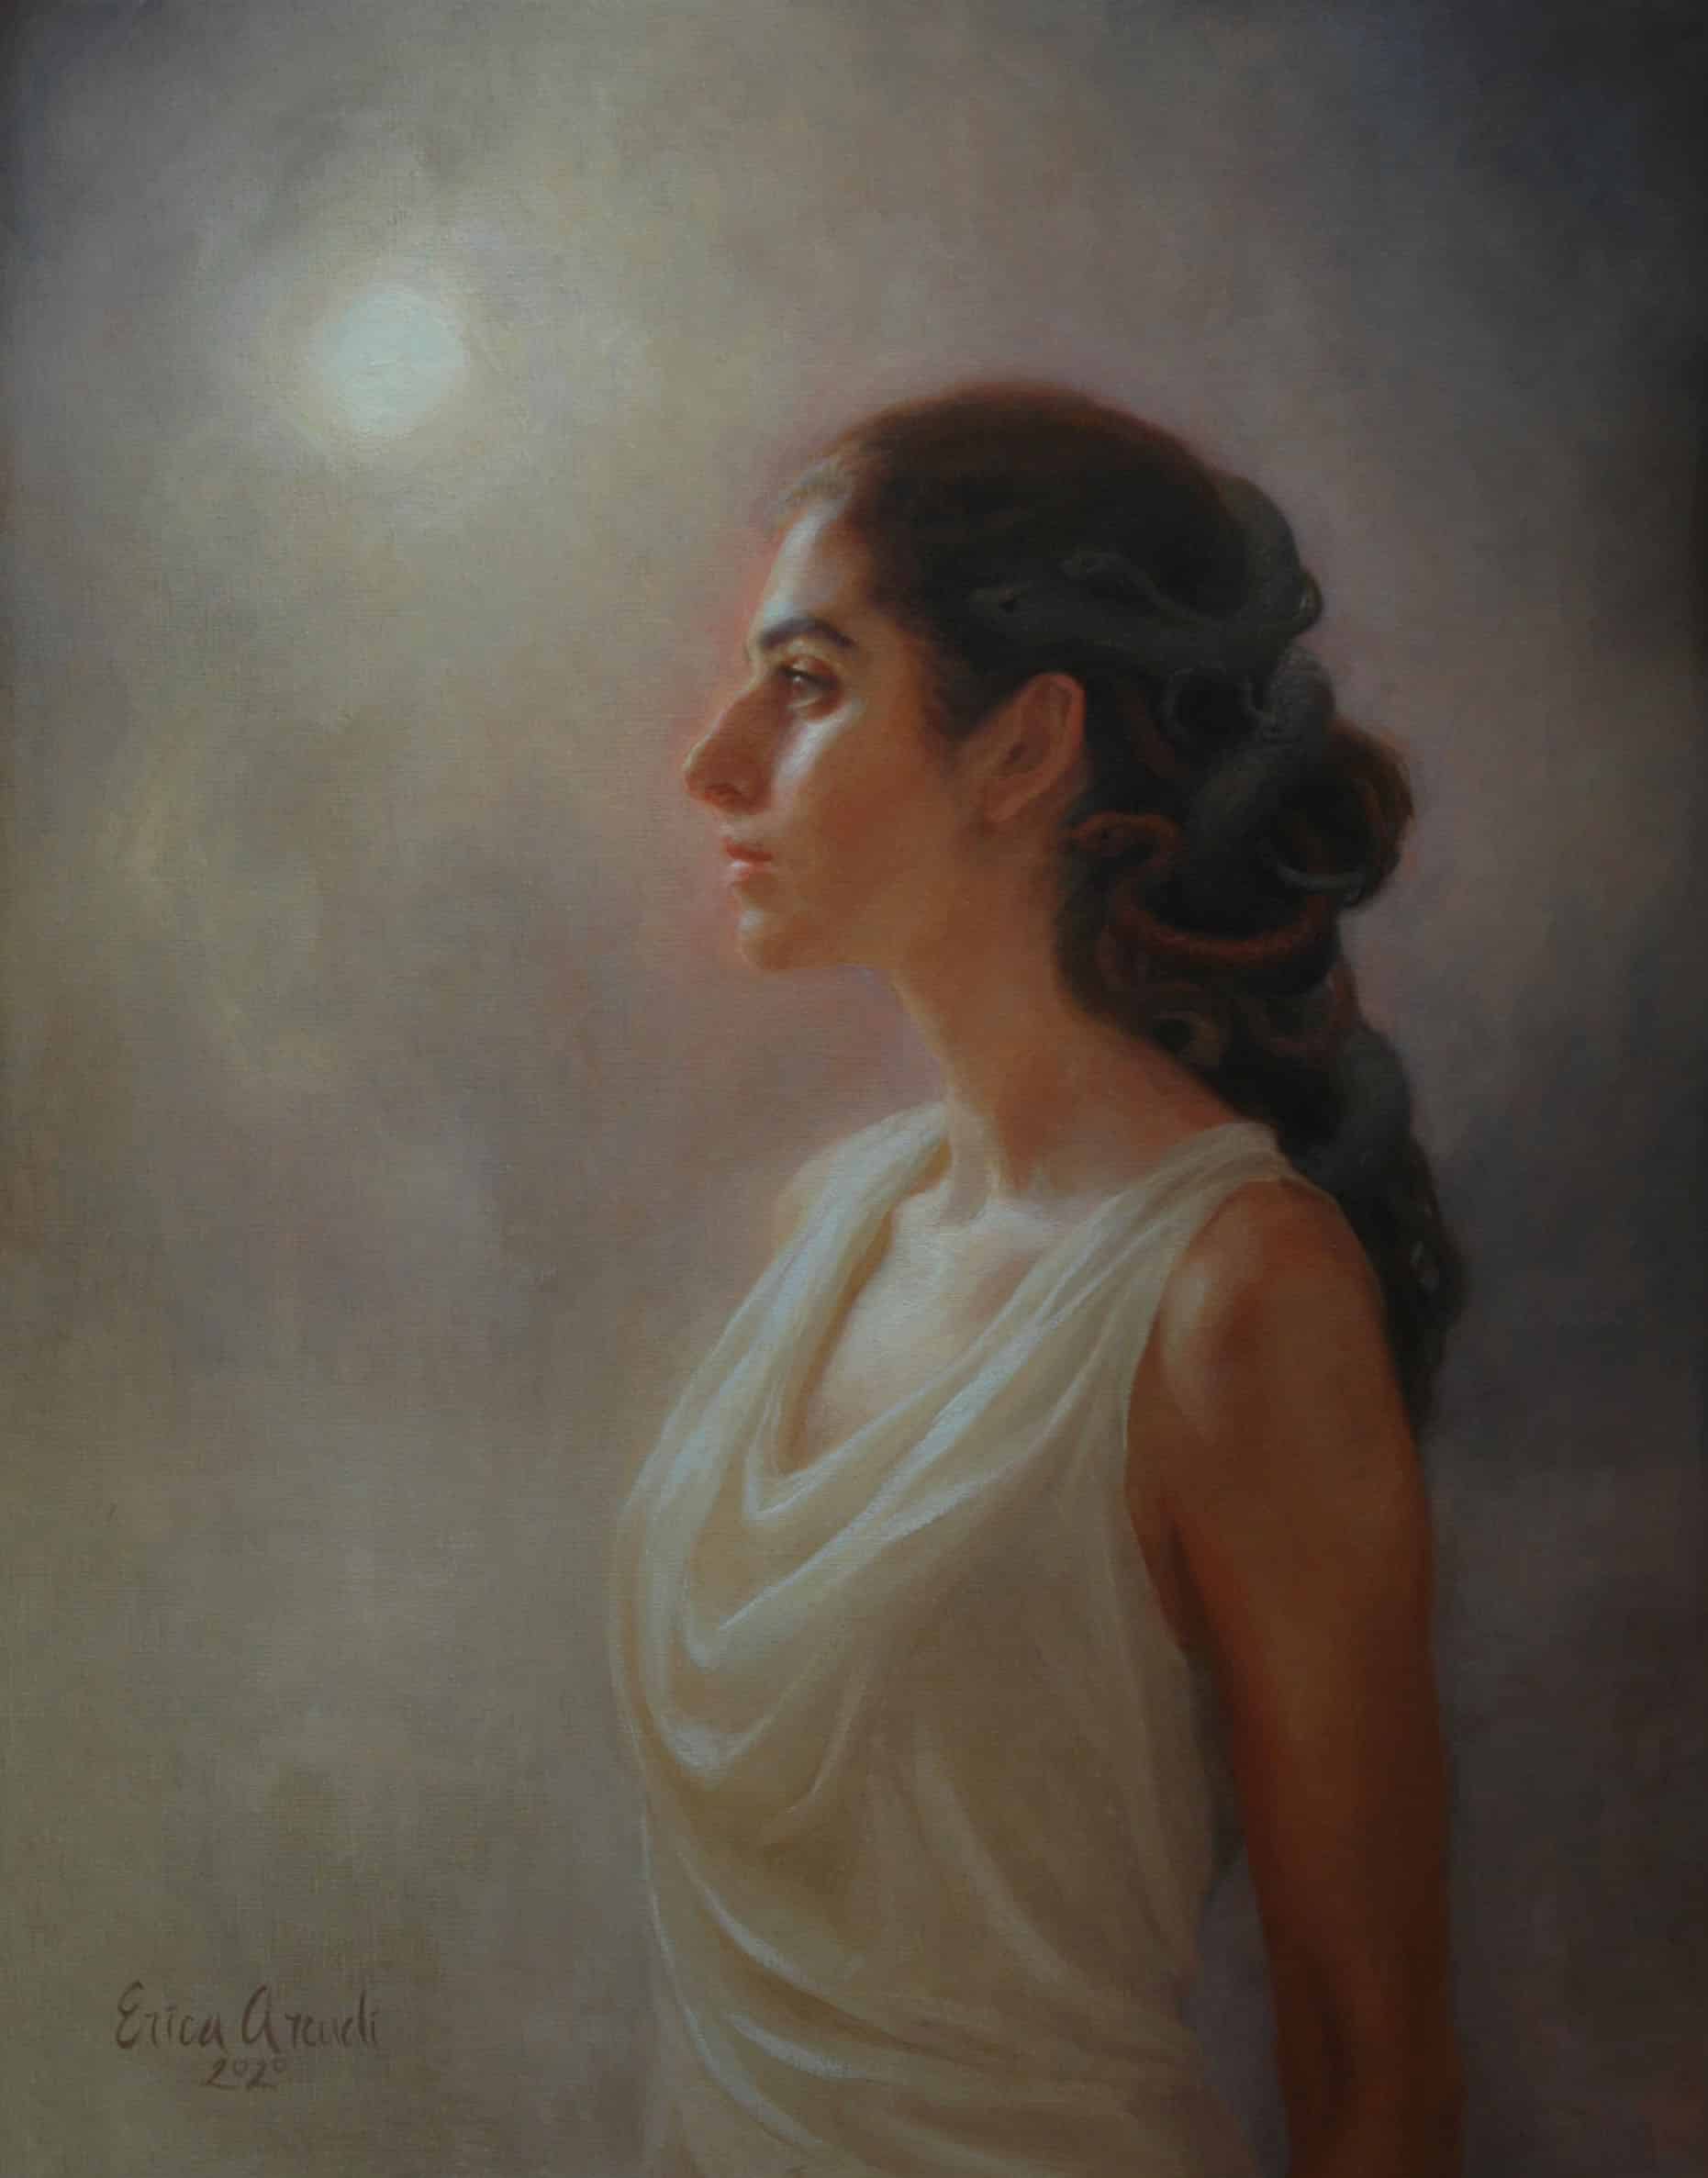 Erica Arcudi, "Medusa", Oil on canvas, 24 x 20 in. 2020